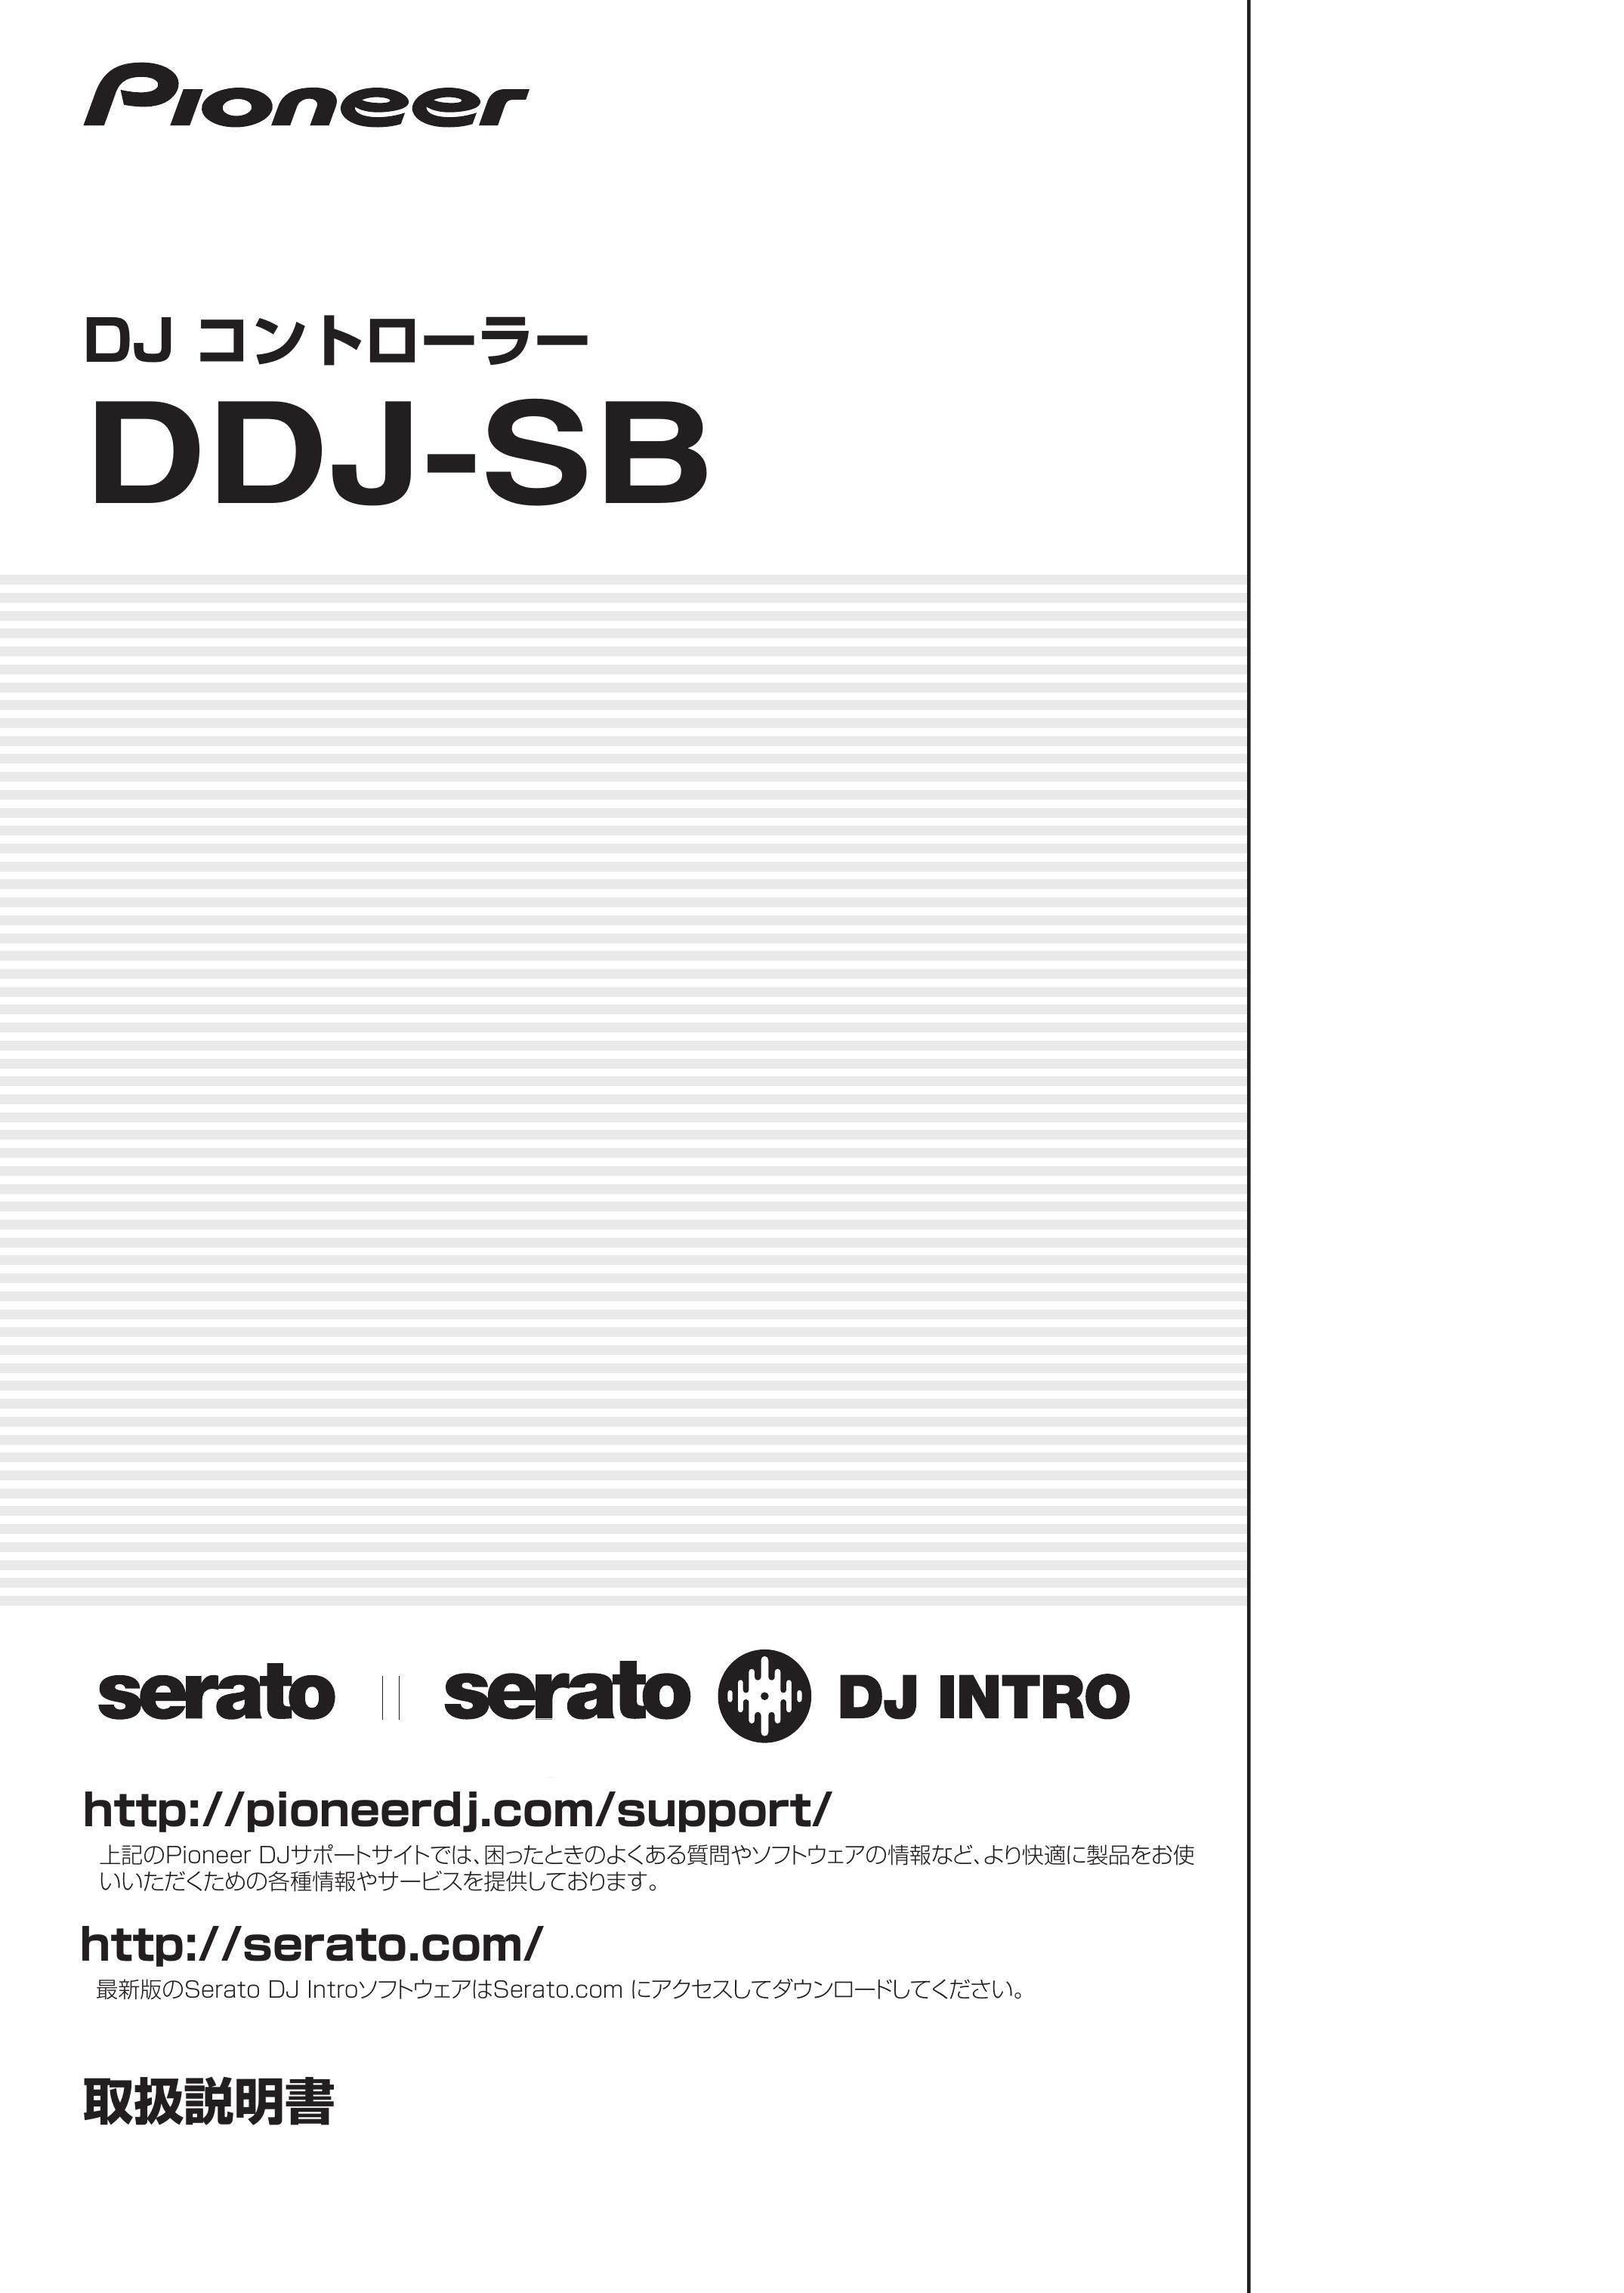 Pioneer DDJ-SB DJ Equipment User Manual